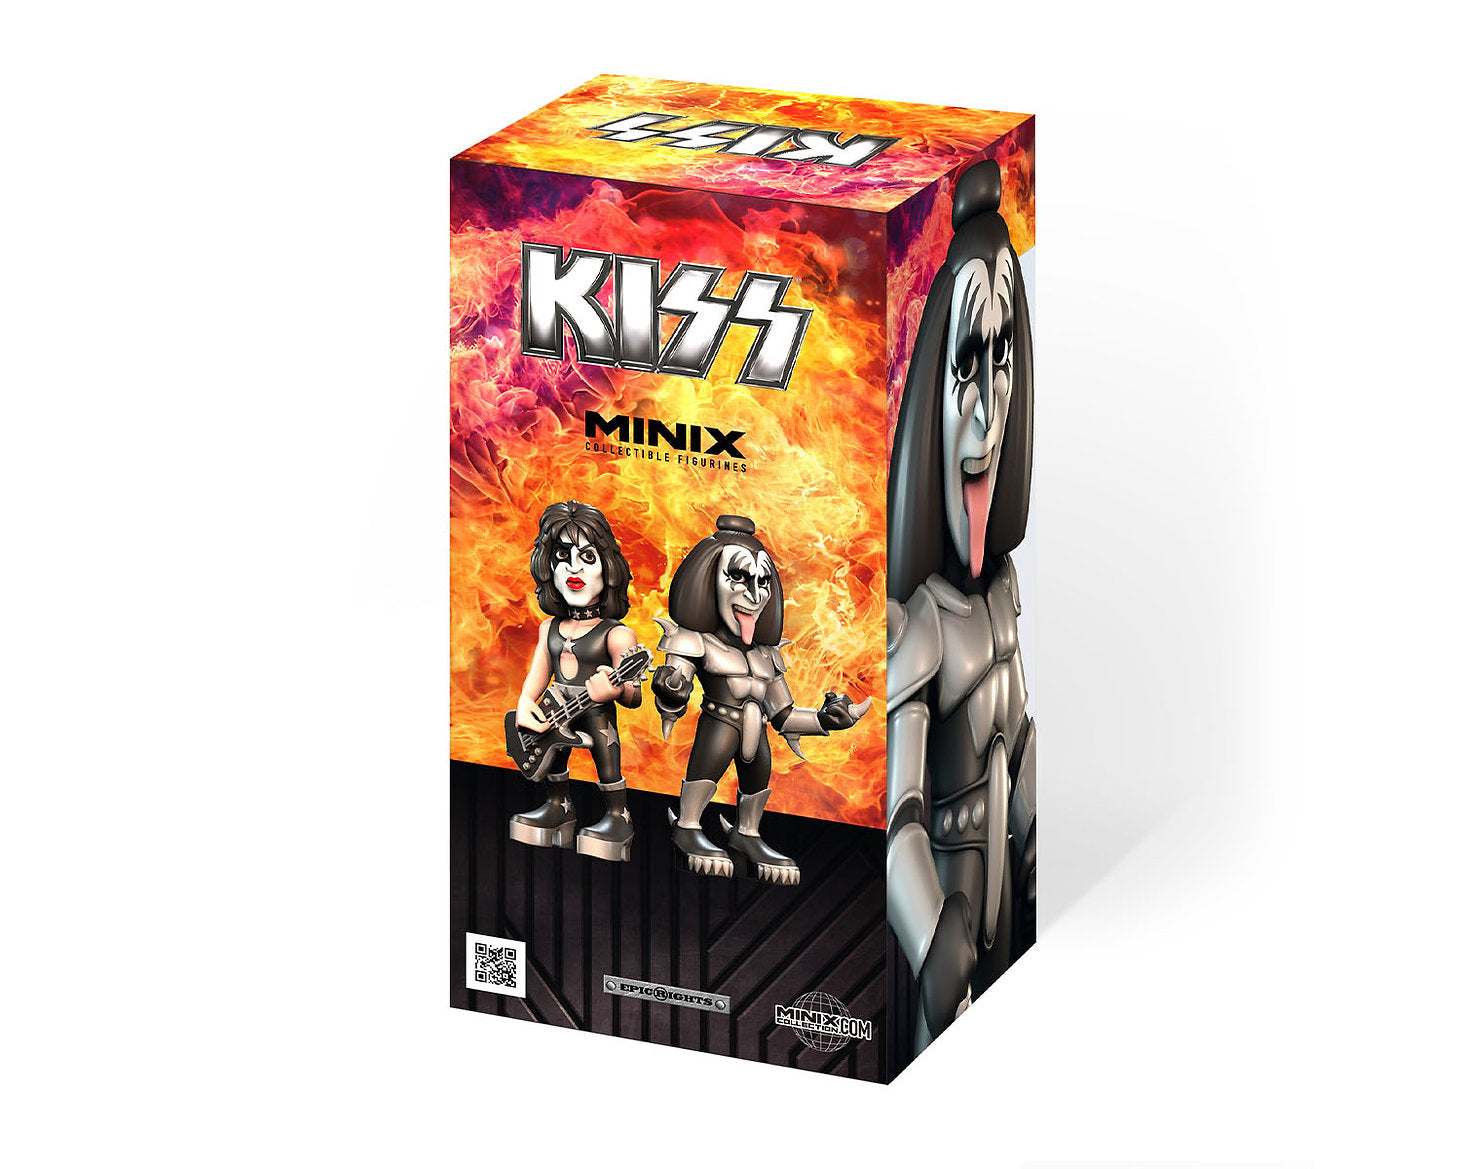 Minix -MUSIC -KISS -THE DEMON -Figurine -12 cm